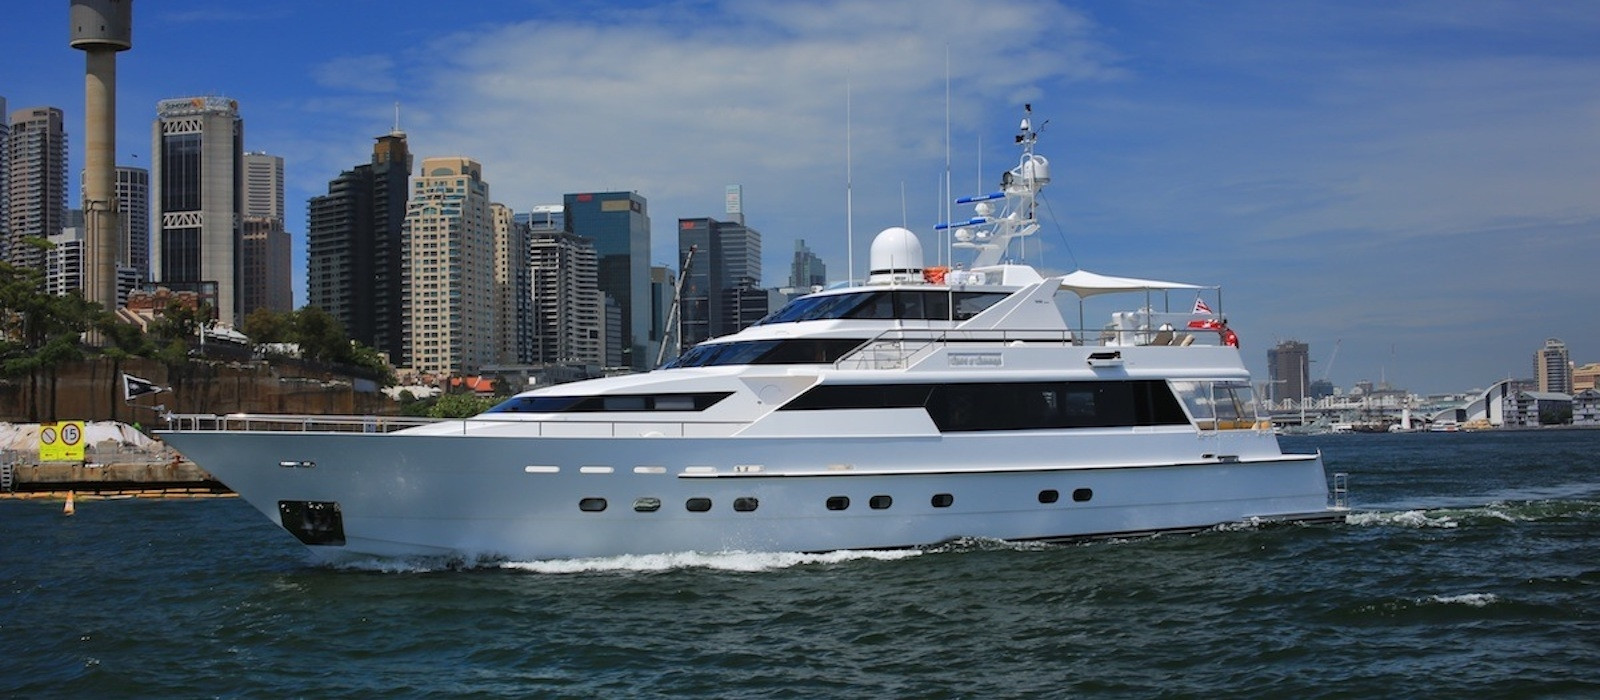 new years eve cruise on Oscar II on Sydney Harbour